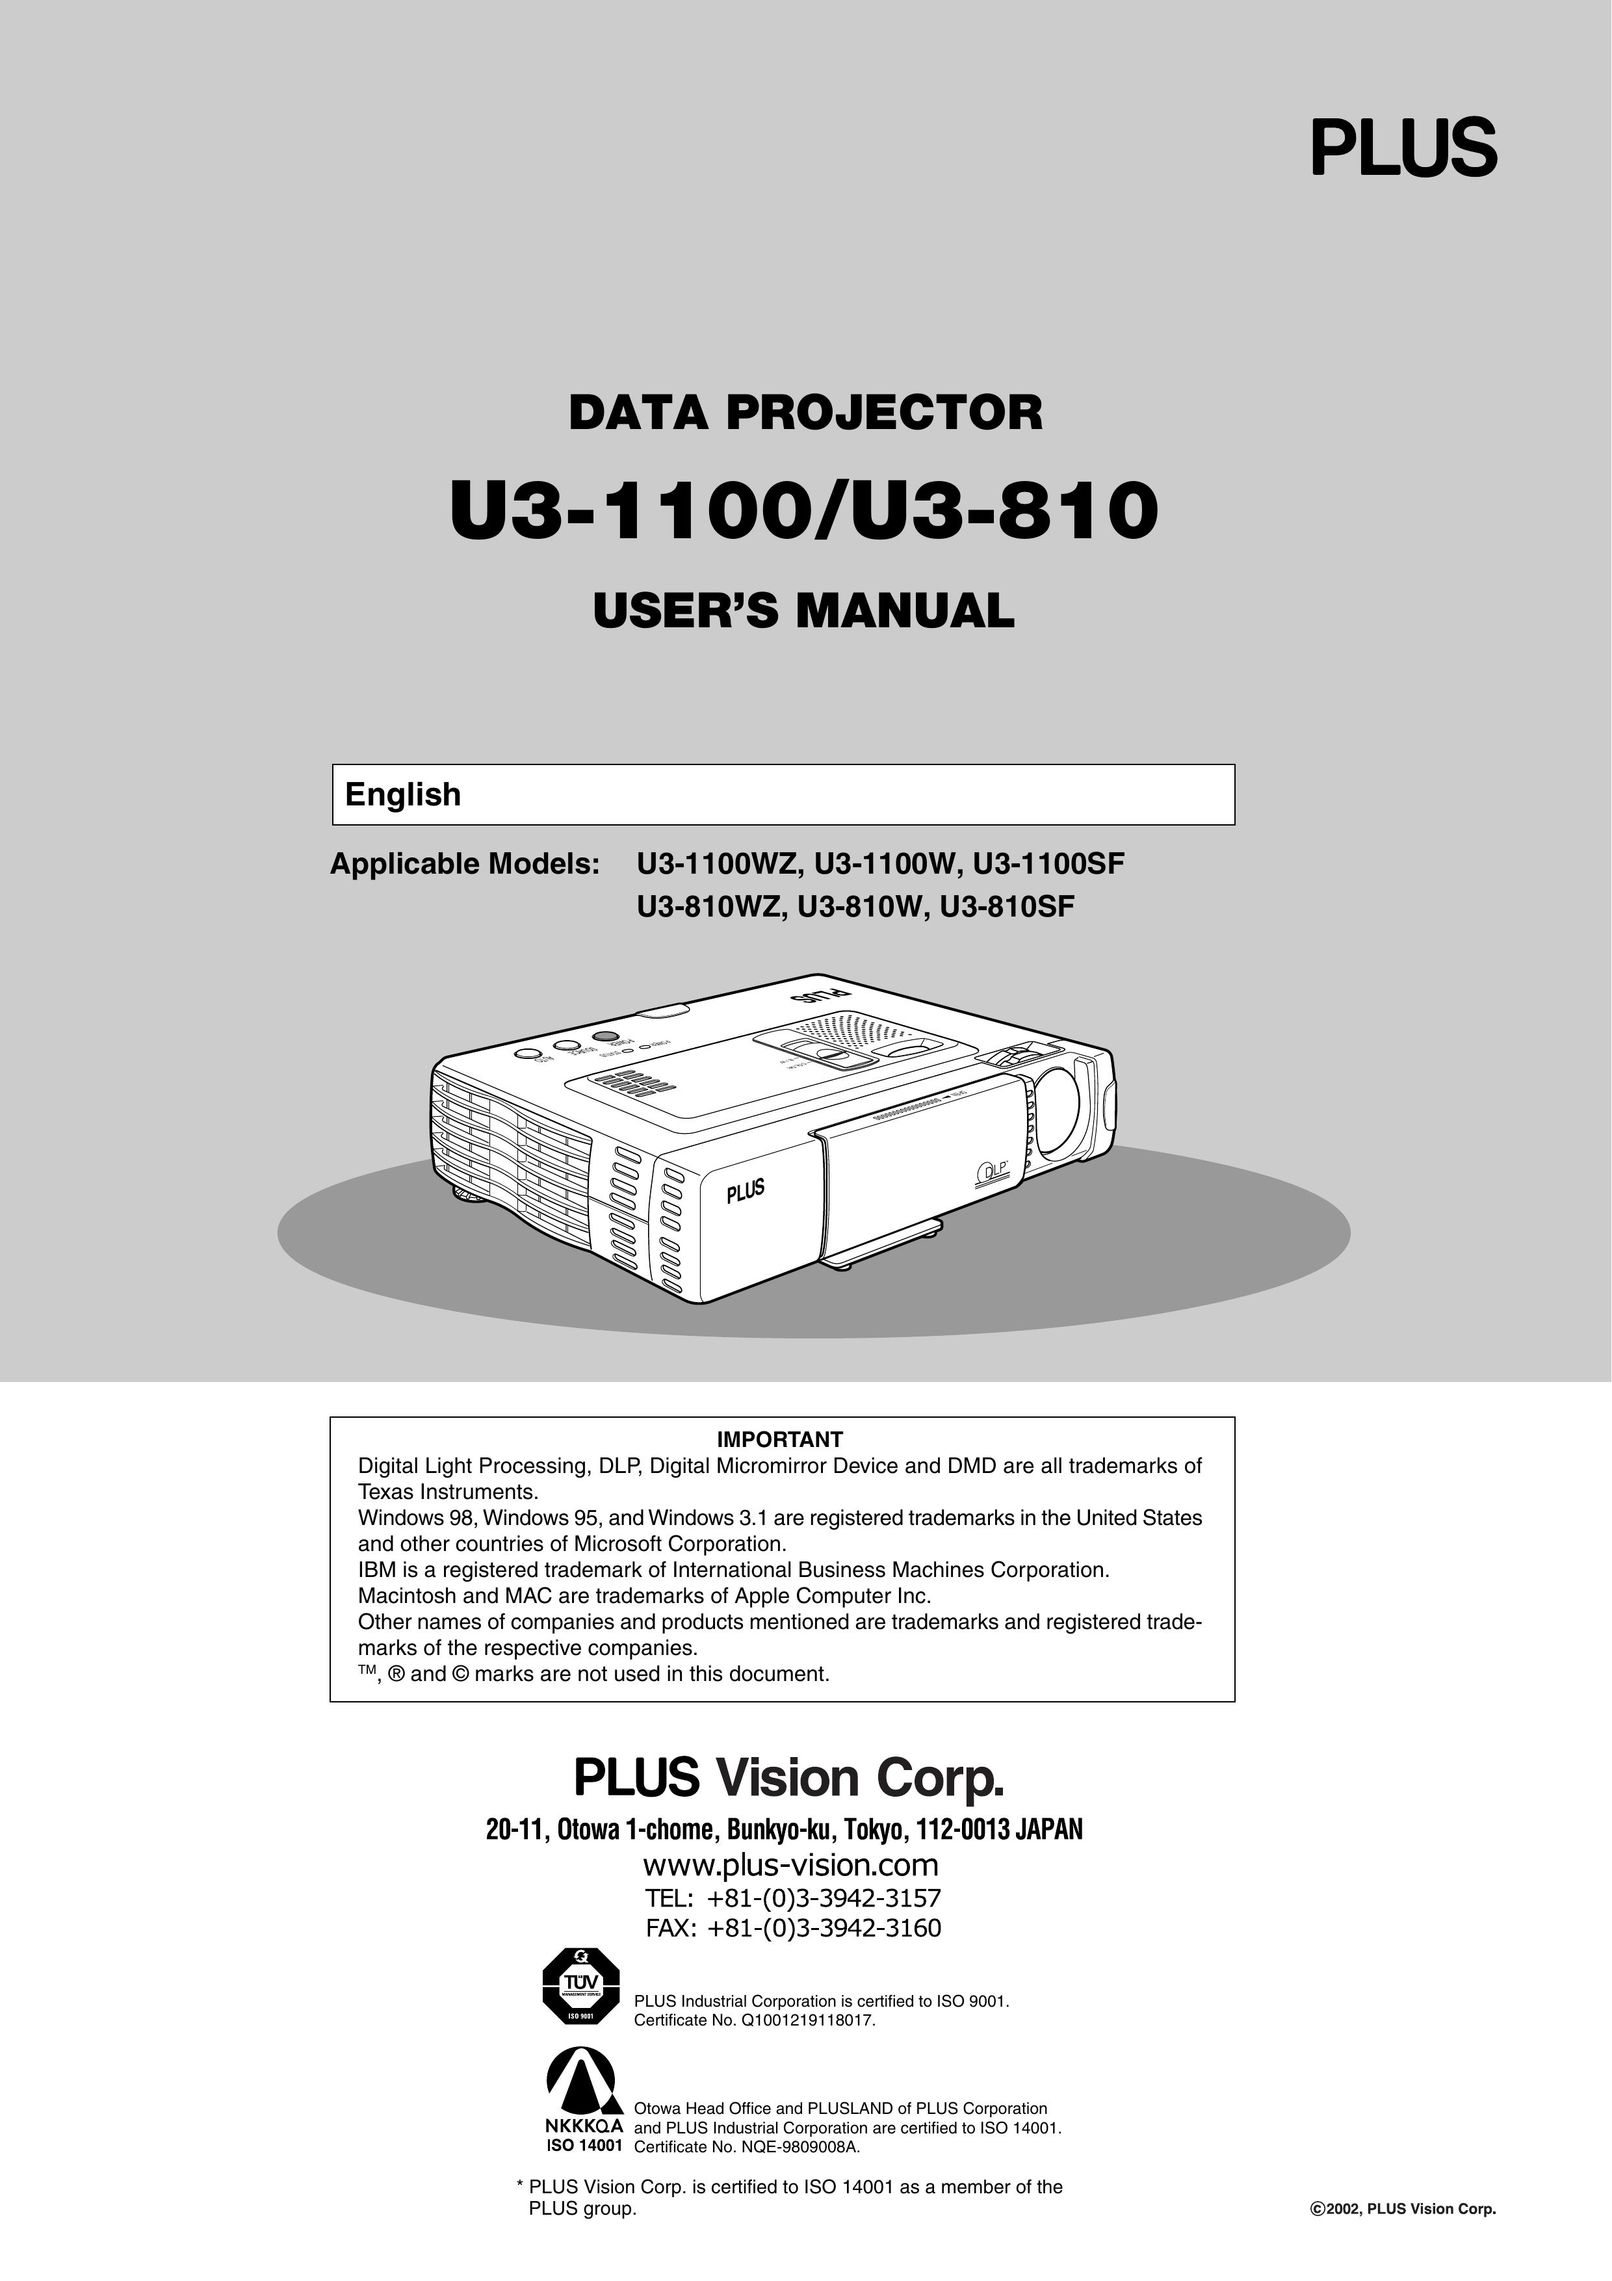 PLUS Vision U3-810SF Projector User Manual